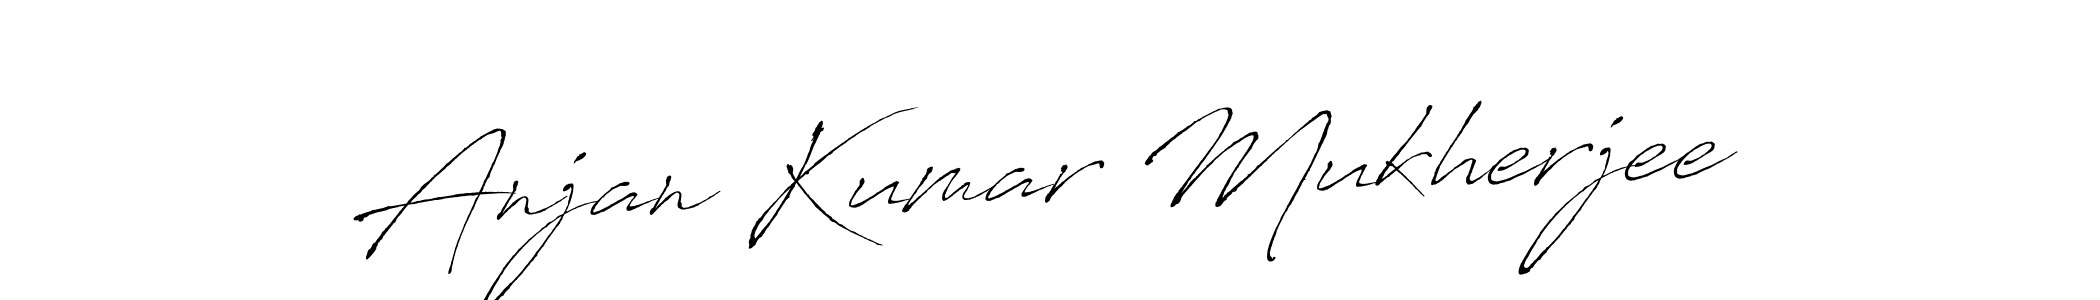 How to Draw Anjan Kumar Mukherjee signature style? Antro_Vectra is a latest design signature styles for name Anjan Kumar Mukherjee. Anjan Kumar Mukherjee signature style 6 images and pictures png